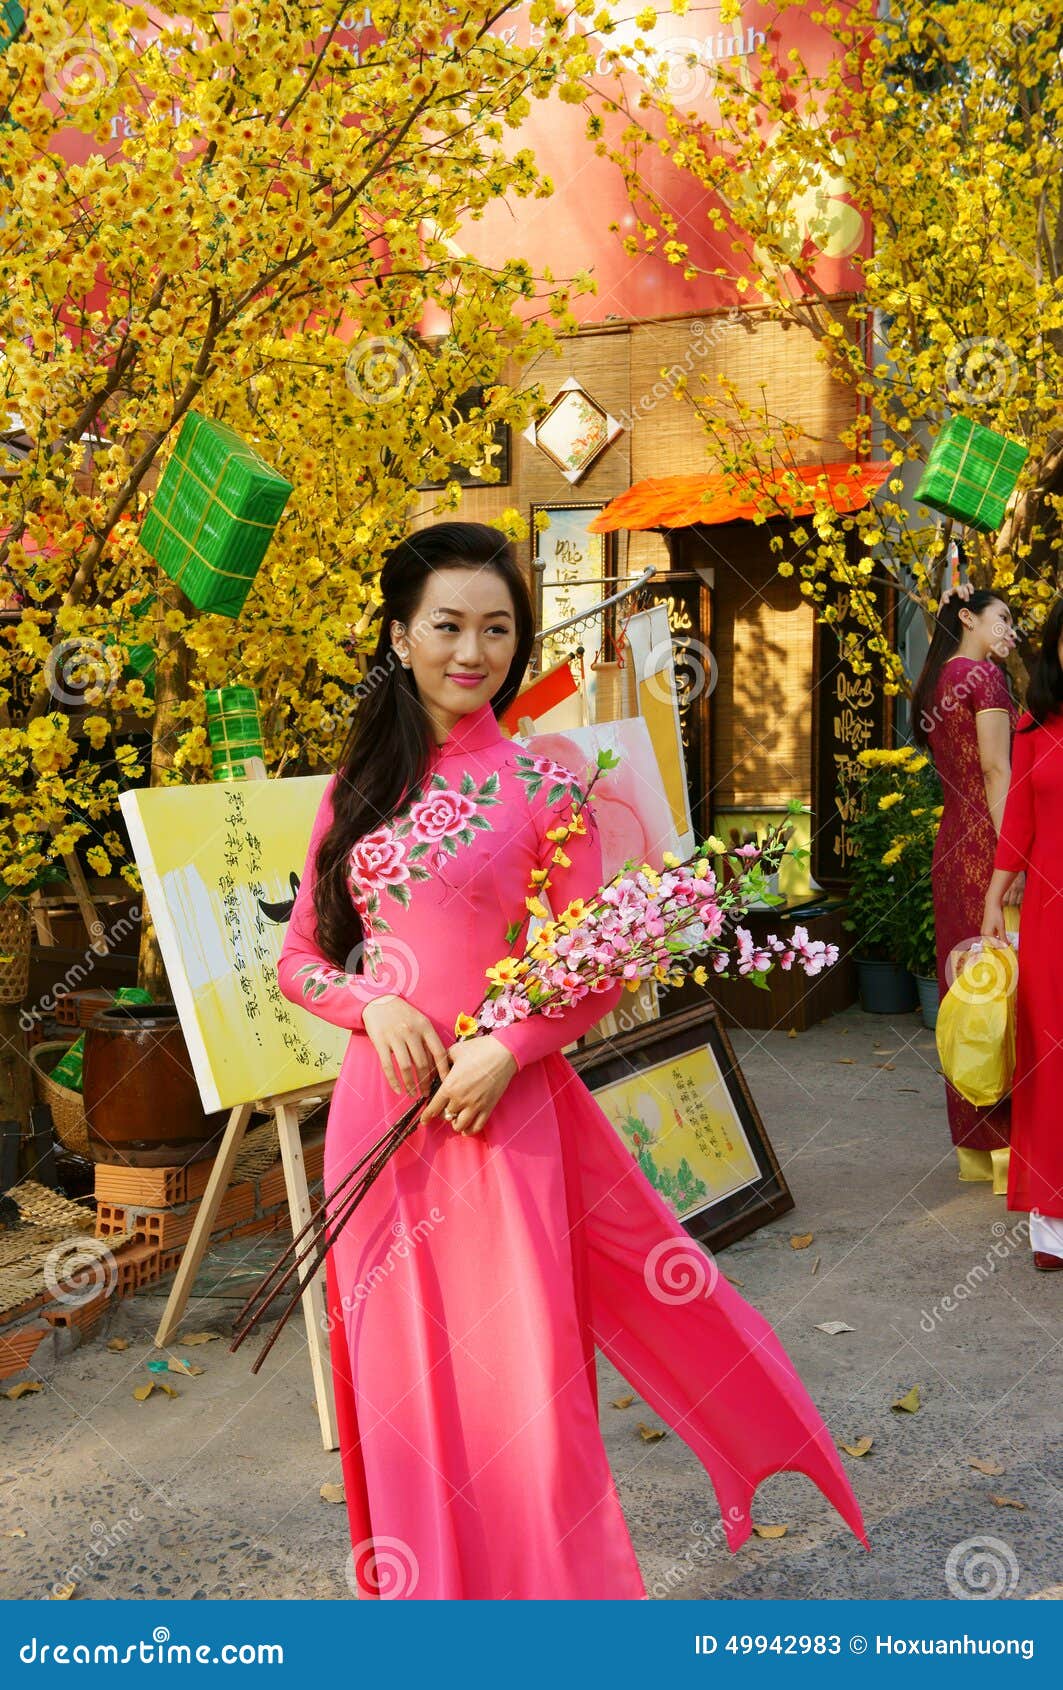 vietnam-tet-ho-chi-minh-city-springtime-viet-nam-feb-atmosphere-colorful-scene-saigon-street-vietnamese-woman-ao-dai-49942983.jpg